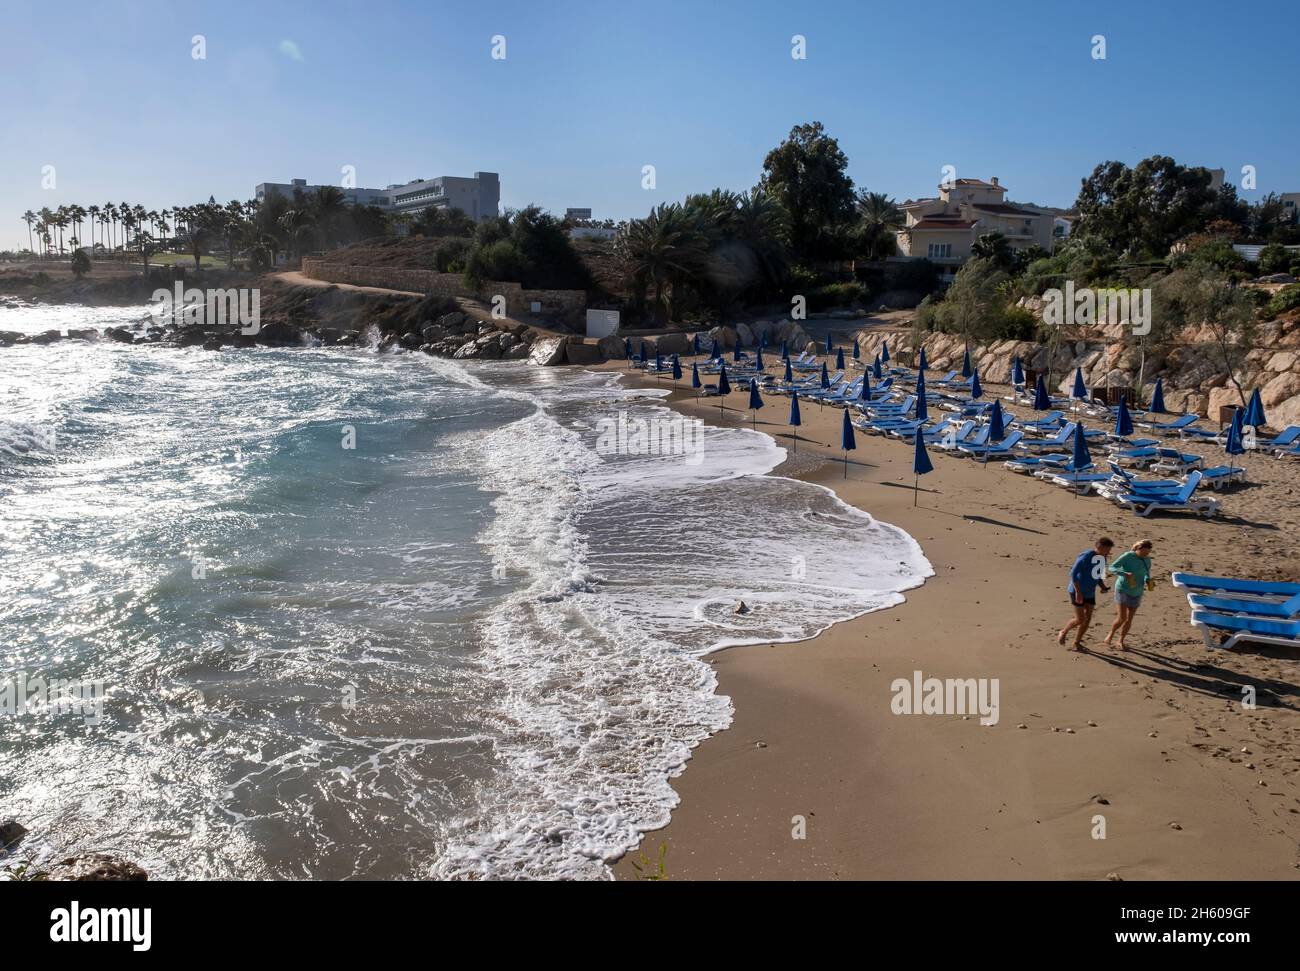 Green Bay beach resort, Protaras, Cyprus. Stock Photo